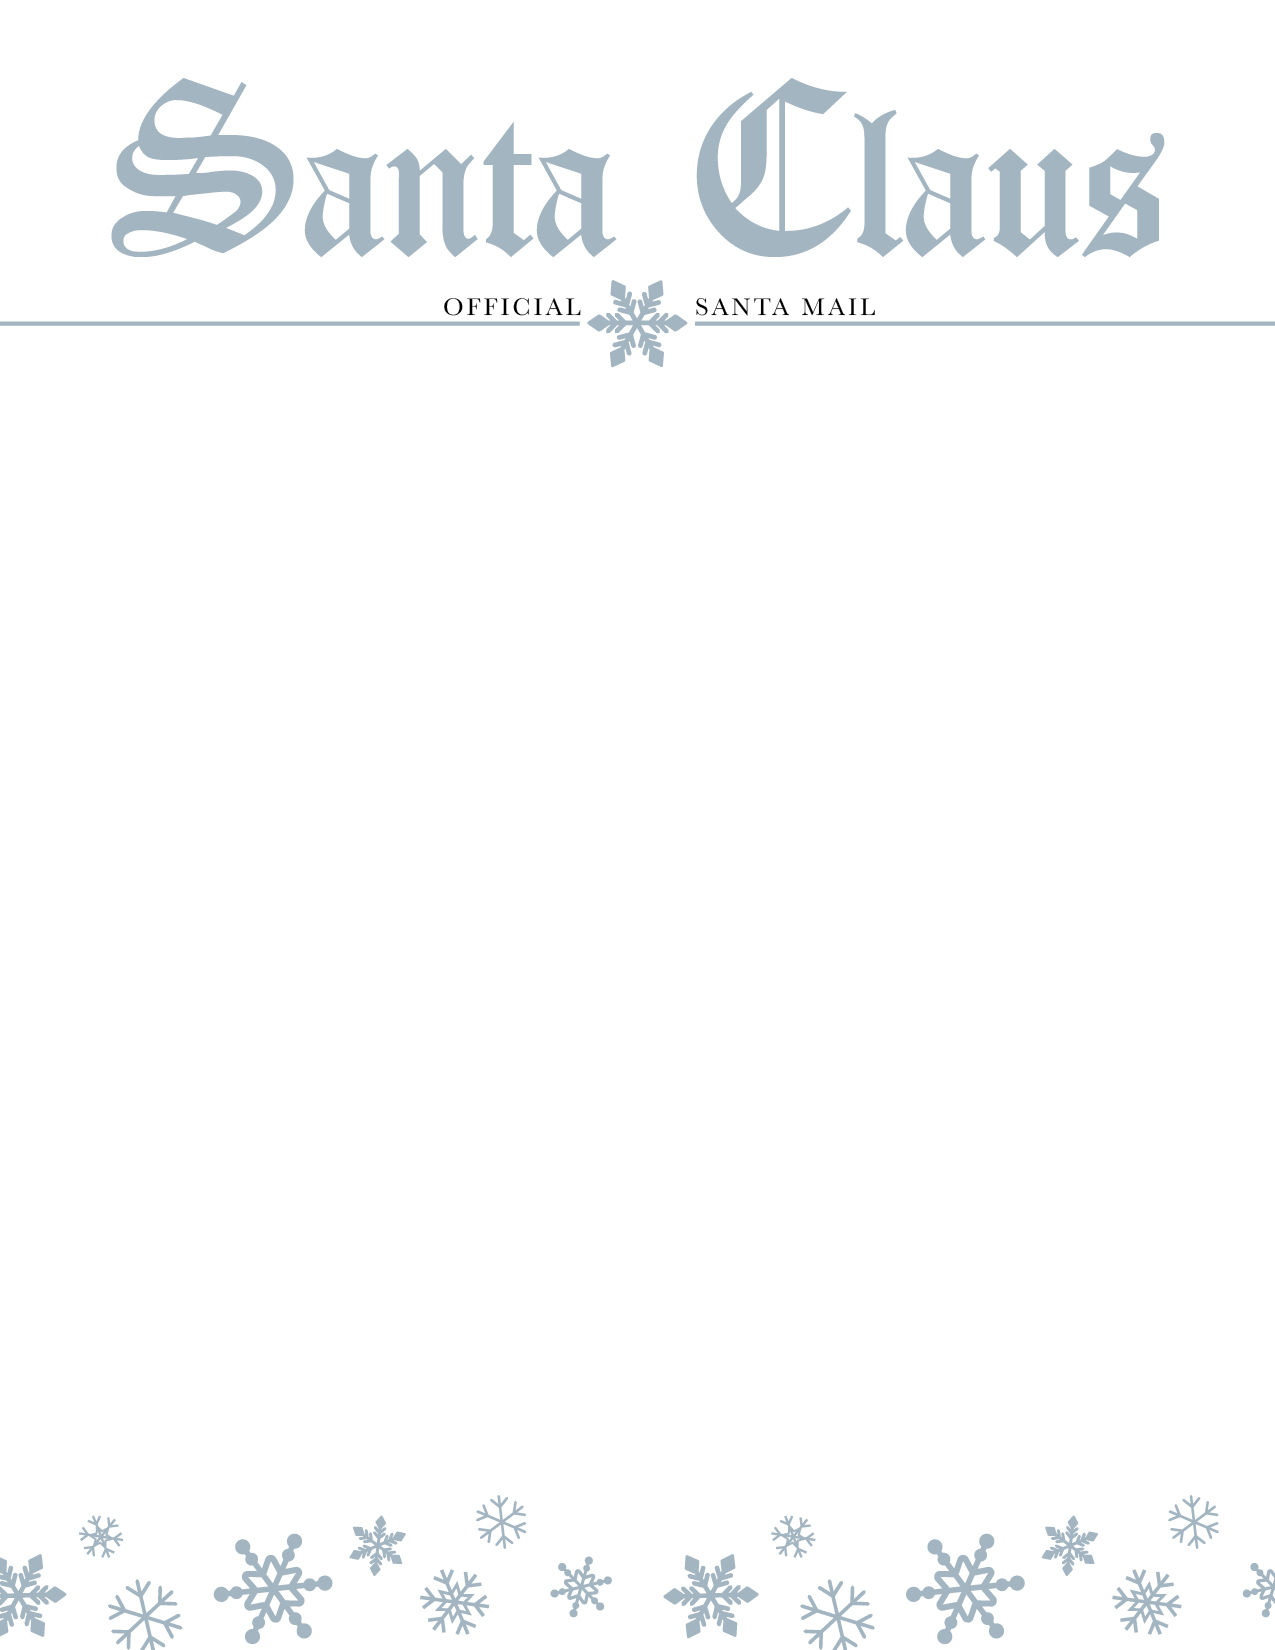 7-best-images-of-printable-santa-letterhead-free-templates-free